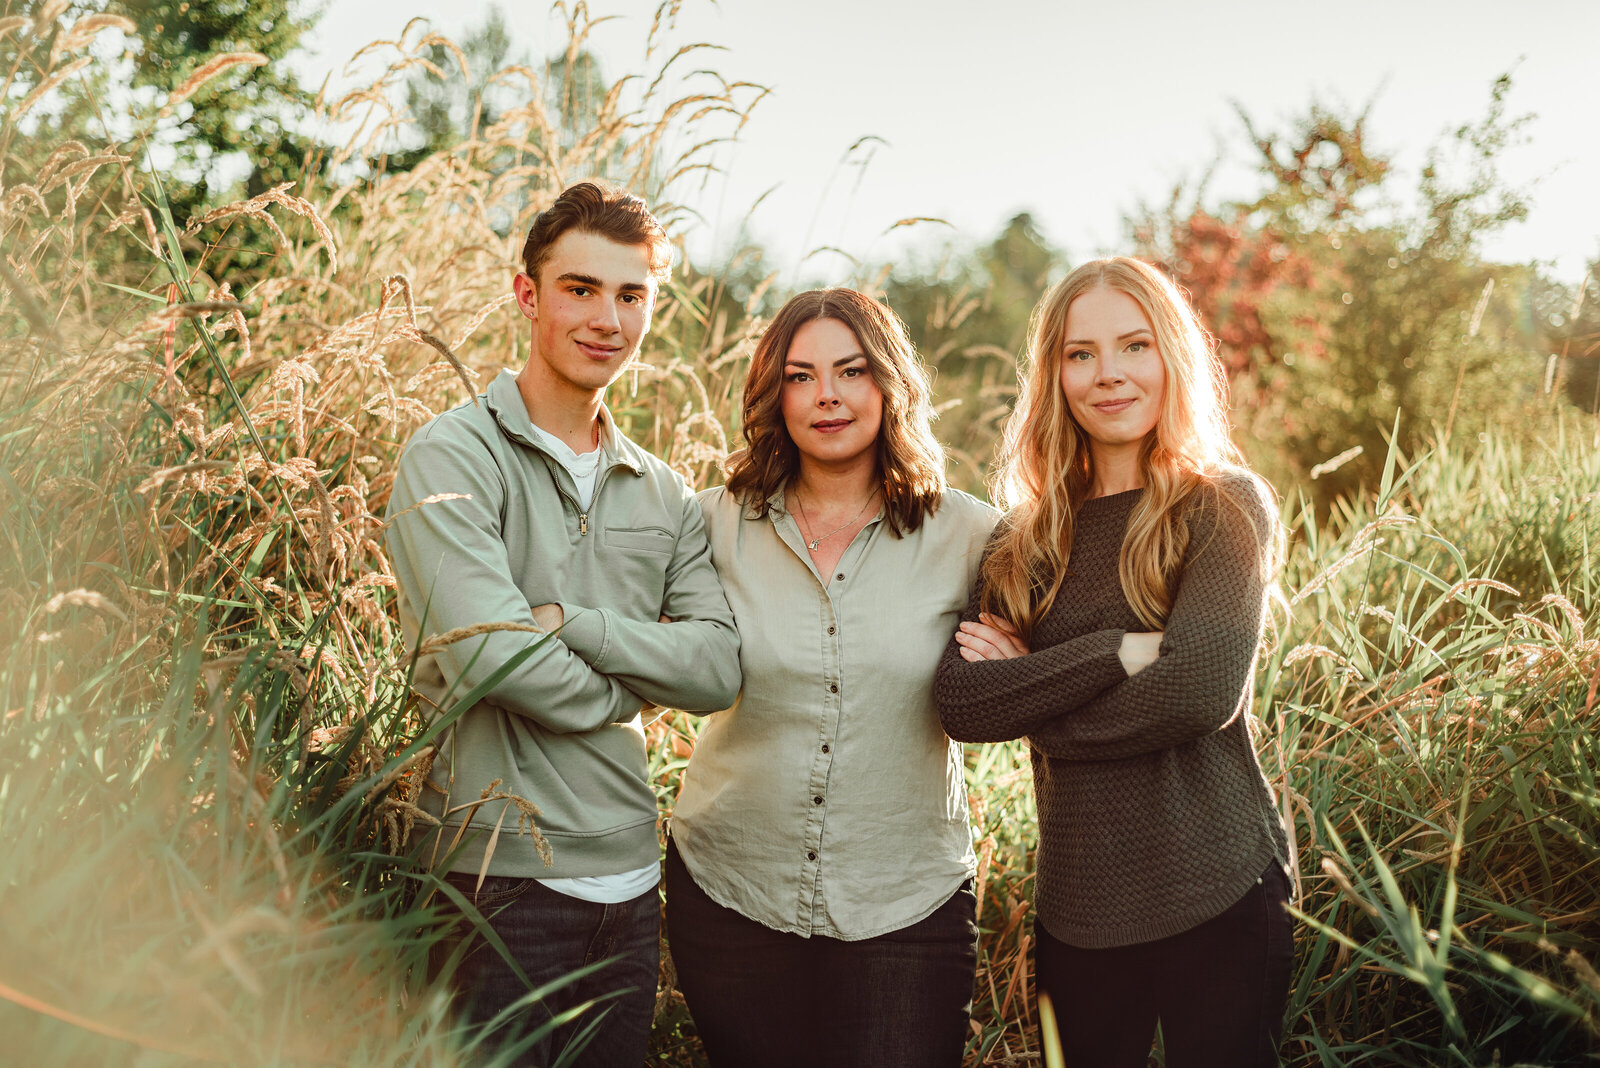 Three Siblings in a beautiful grassy field